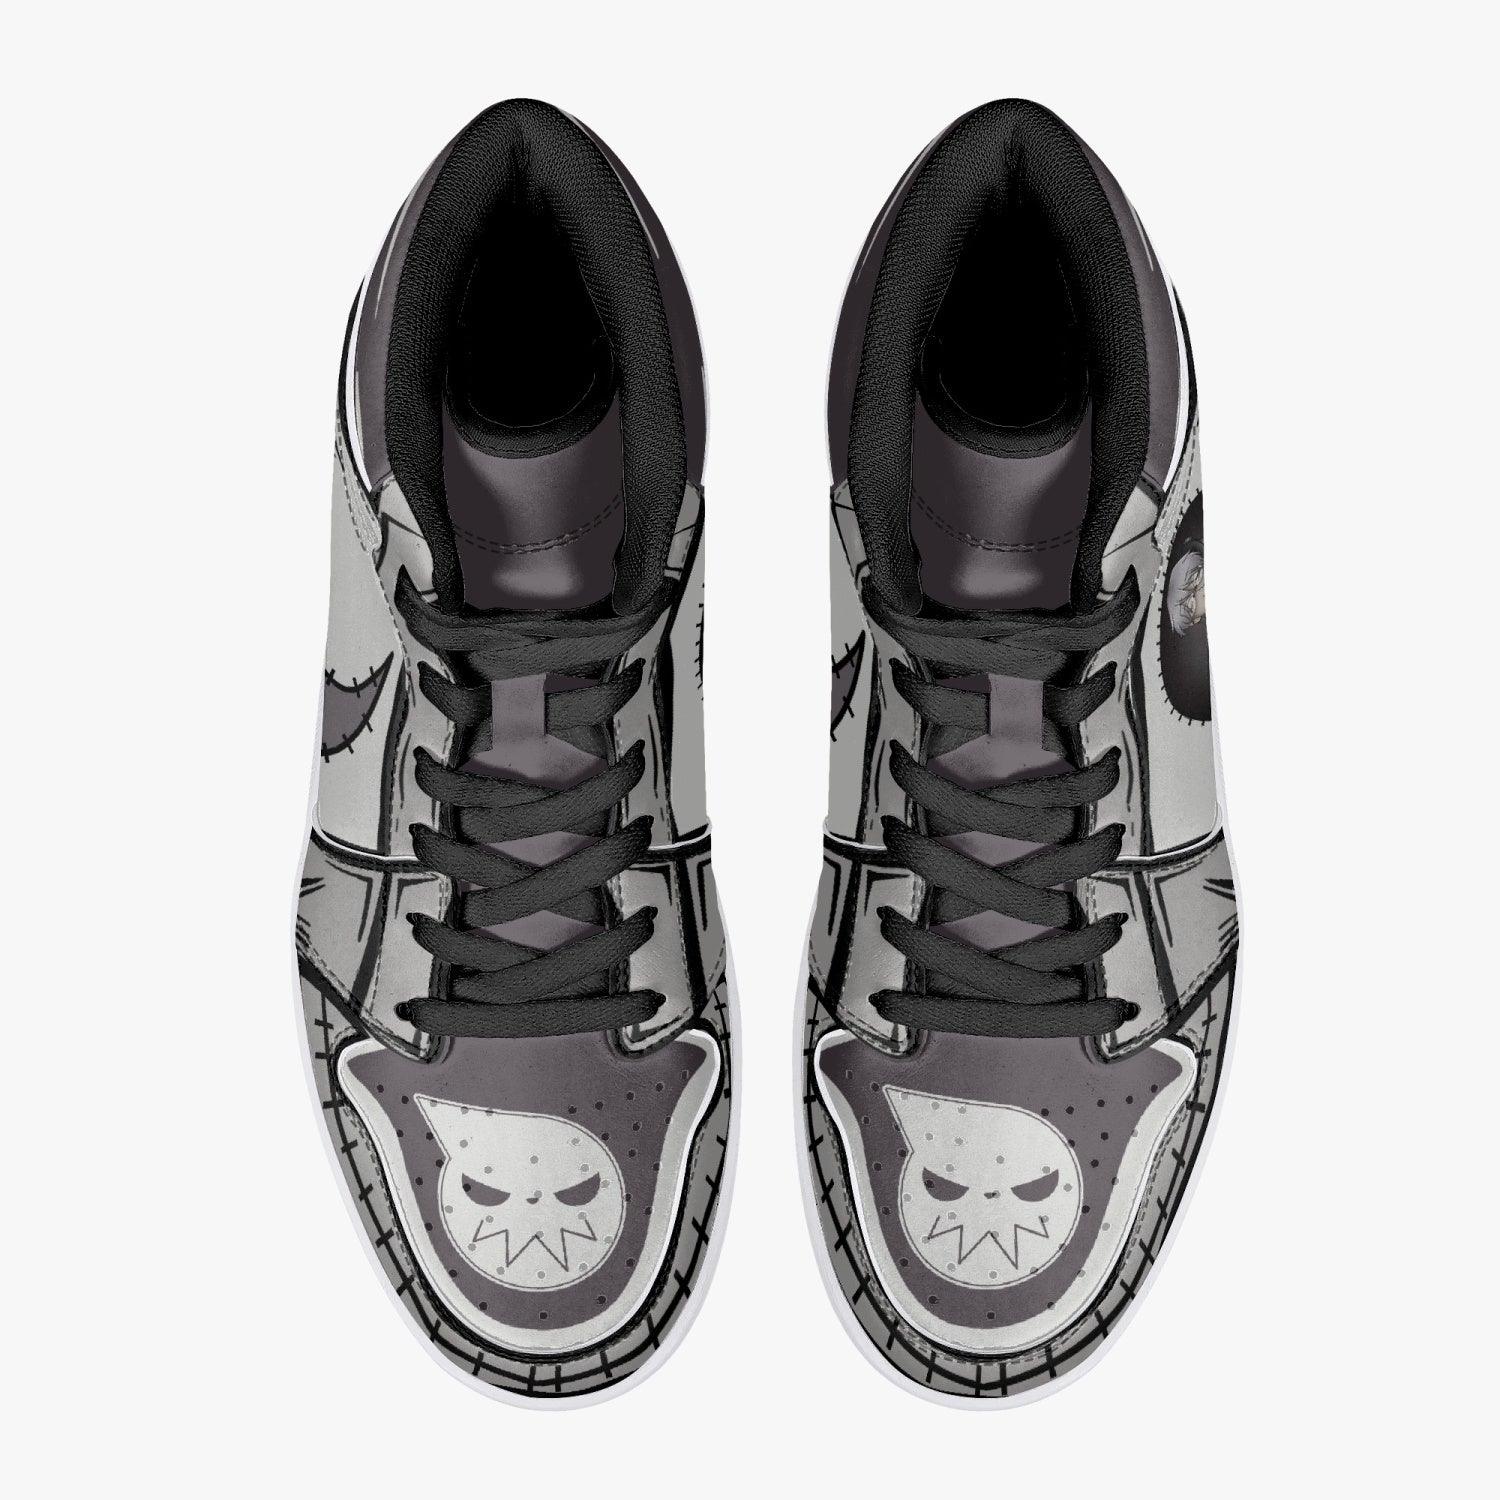 Franken Stein Soul Eater J-Force Shoes-Black-Men-US5/EU38-Anime Shoe Shop